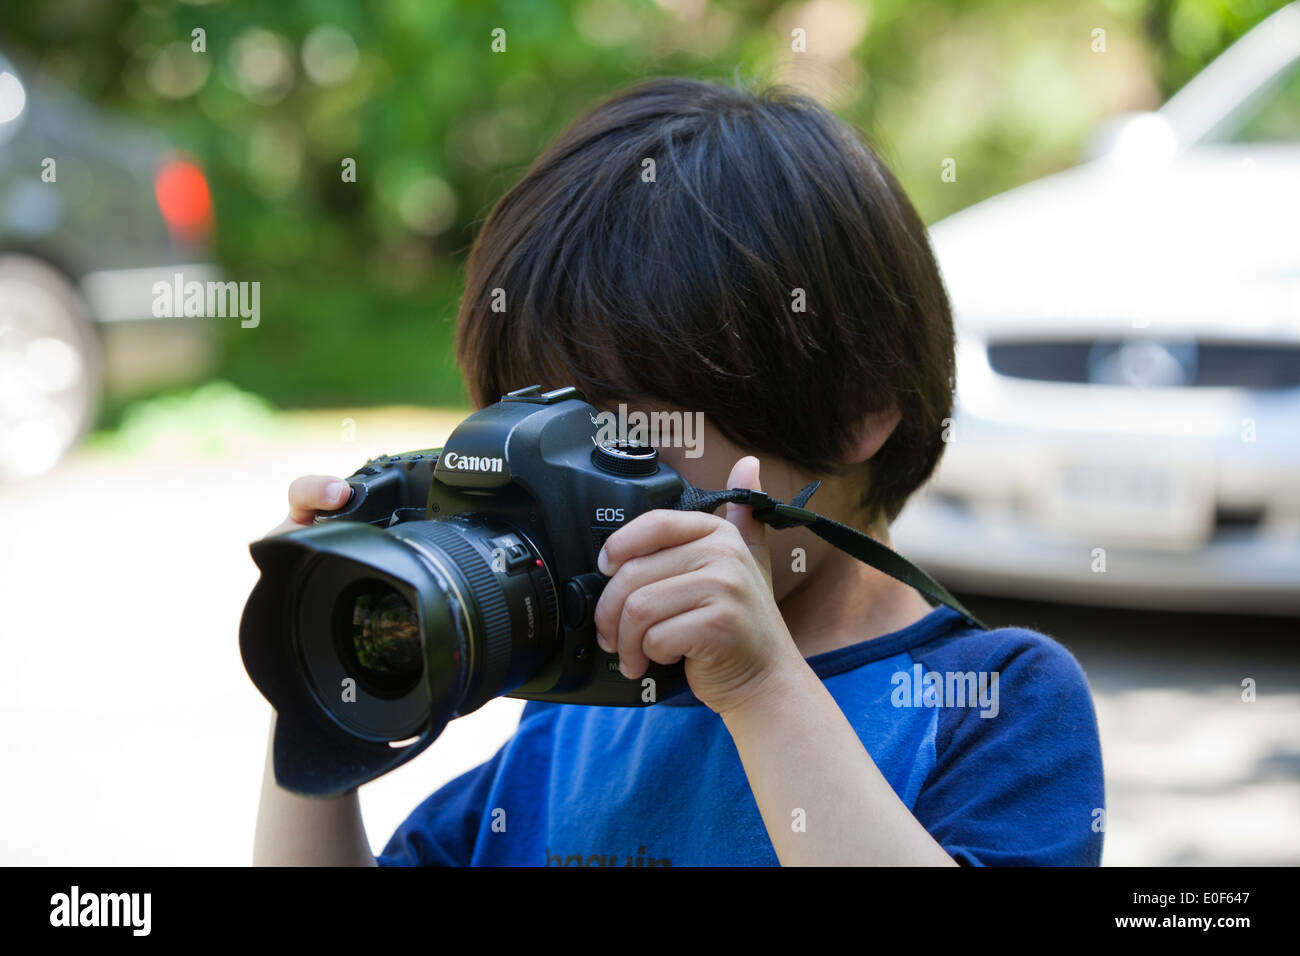 Child photographer, aged 5, using DSLR camera - USA Stock Photo